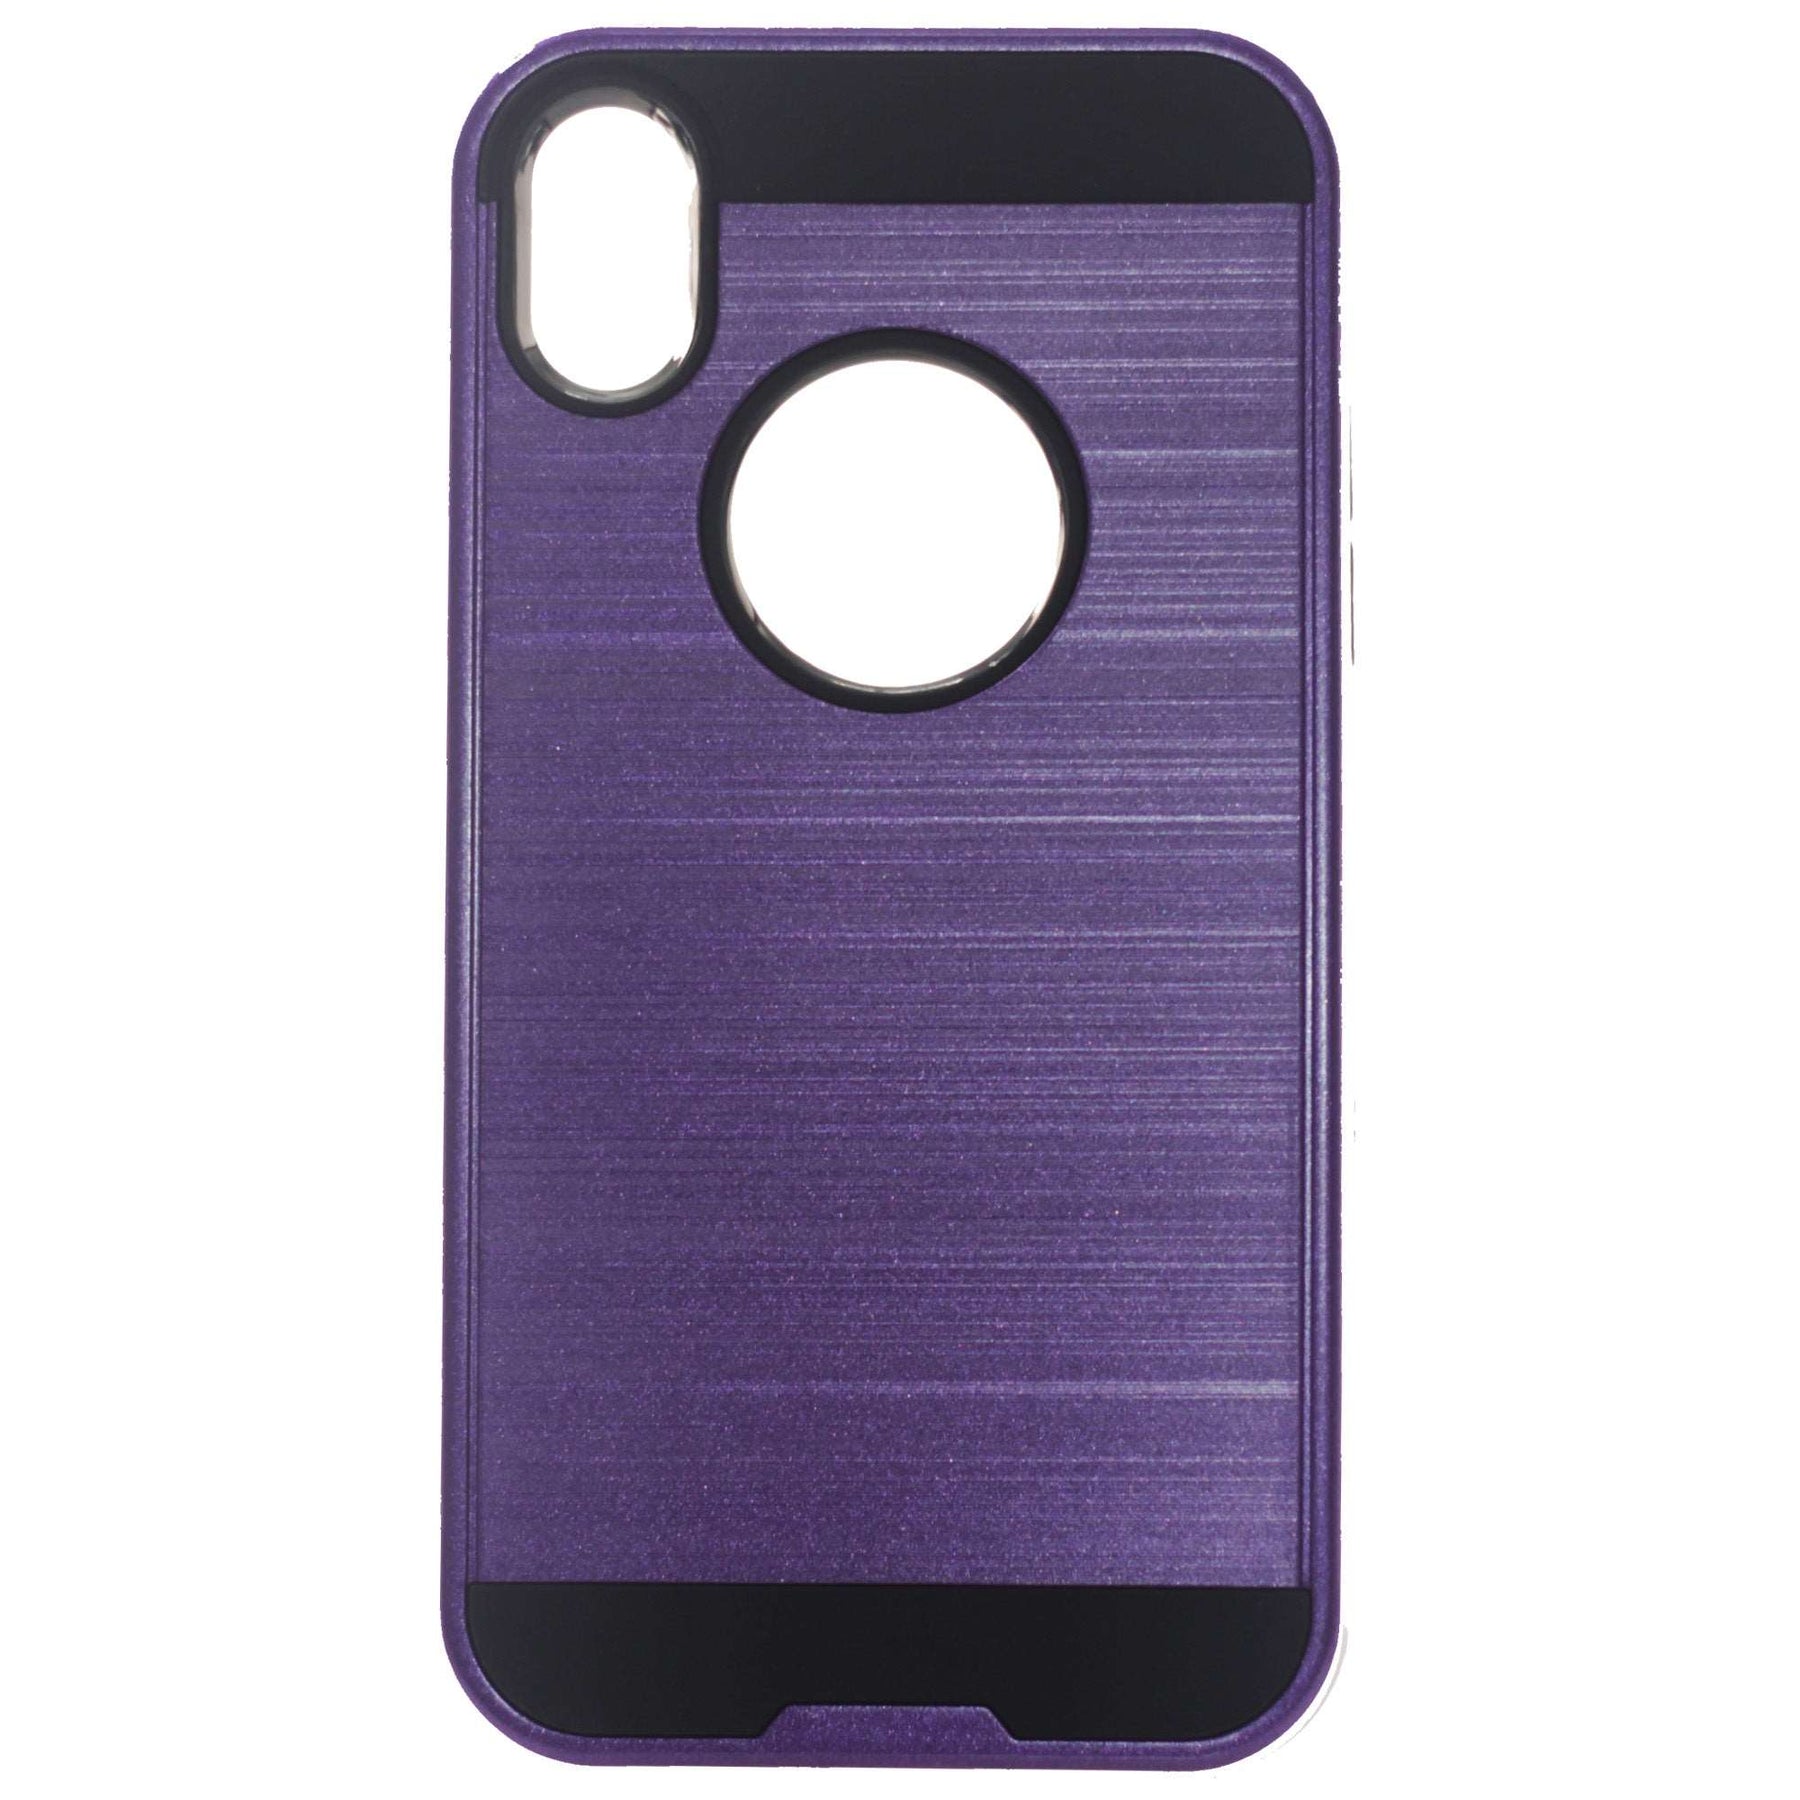 Apple iPhone XR Slim Armor Case Purple